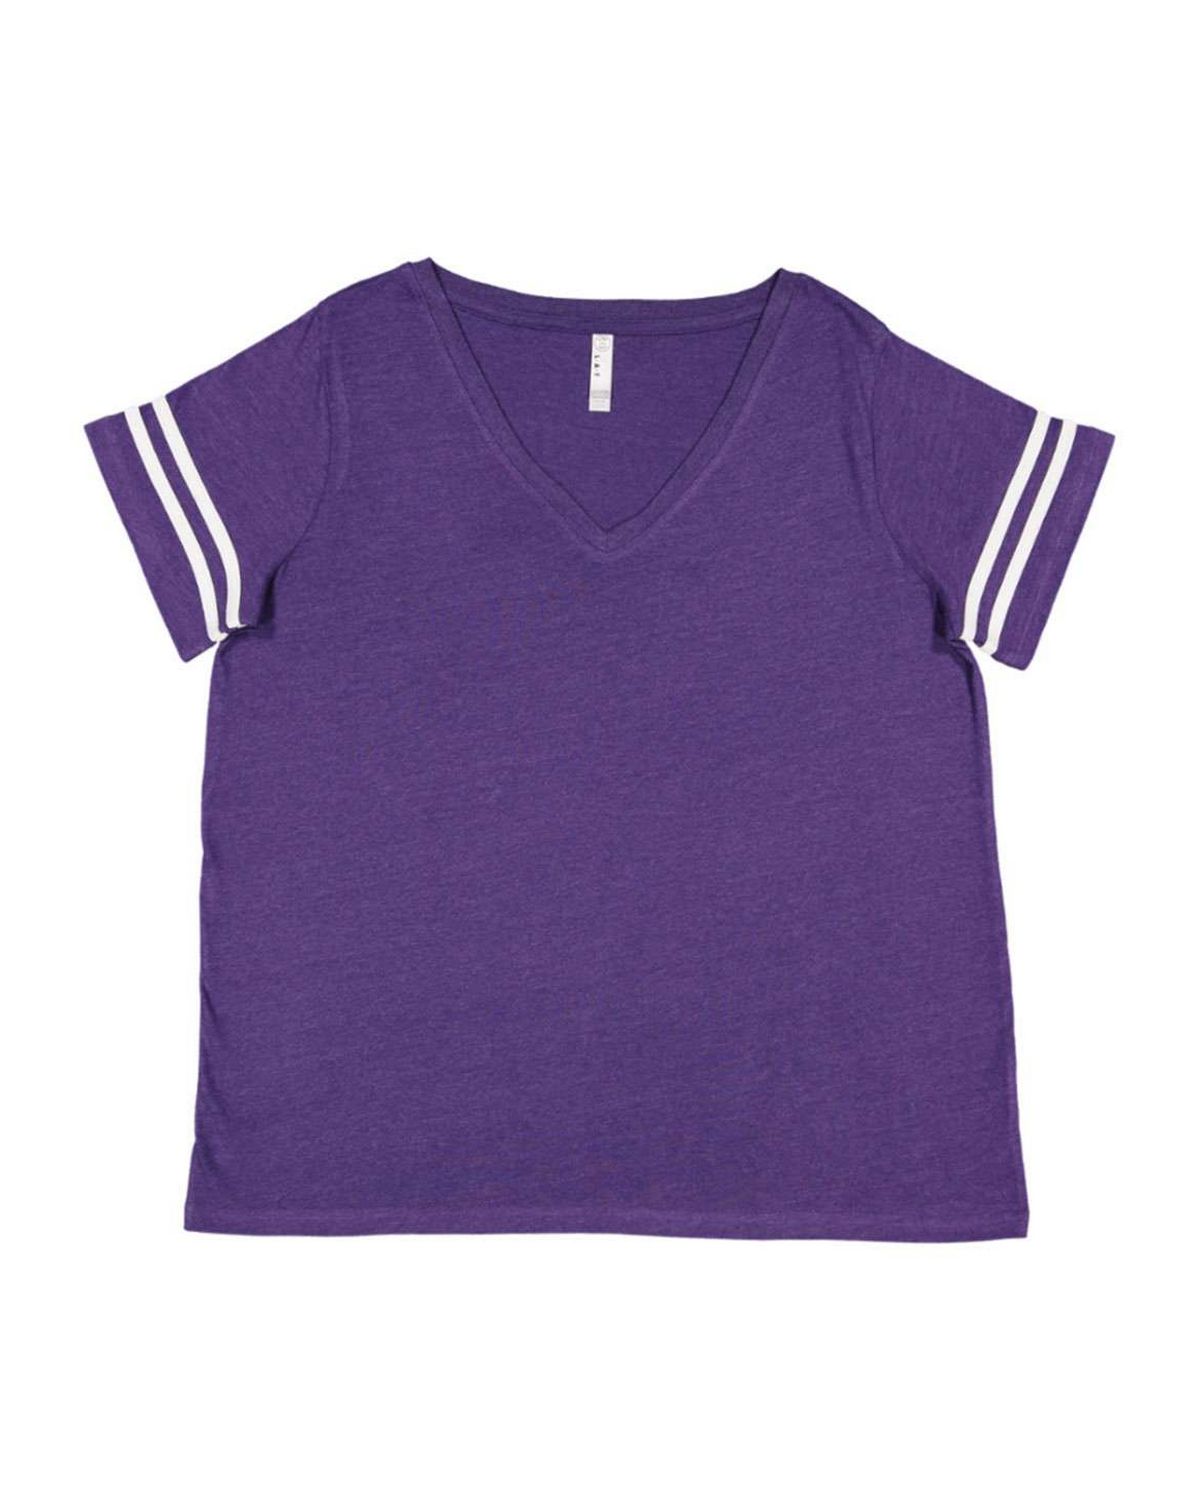 Lat 3837 Ladies Curvy Football Premium Jersey T-Shirt